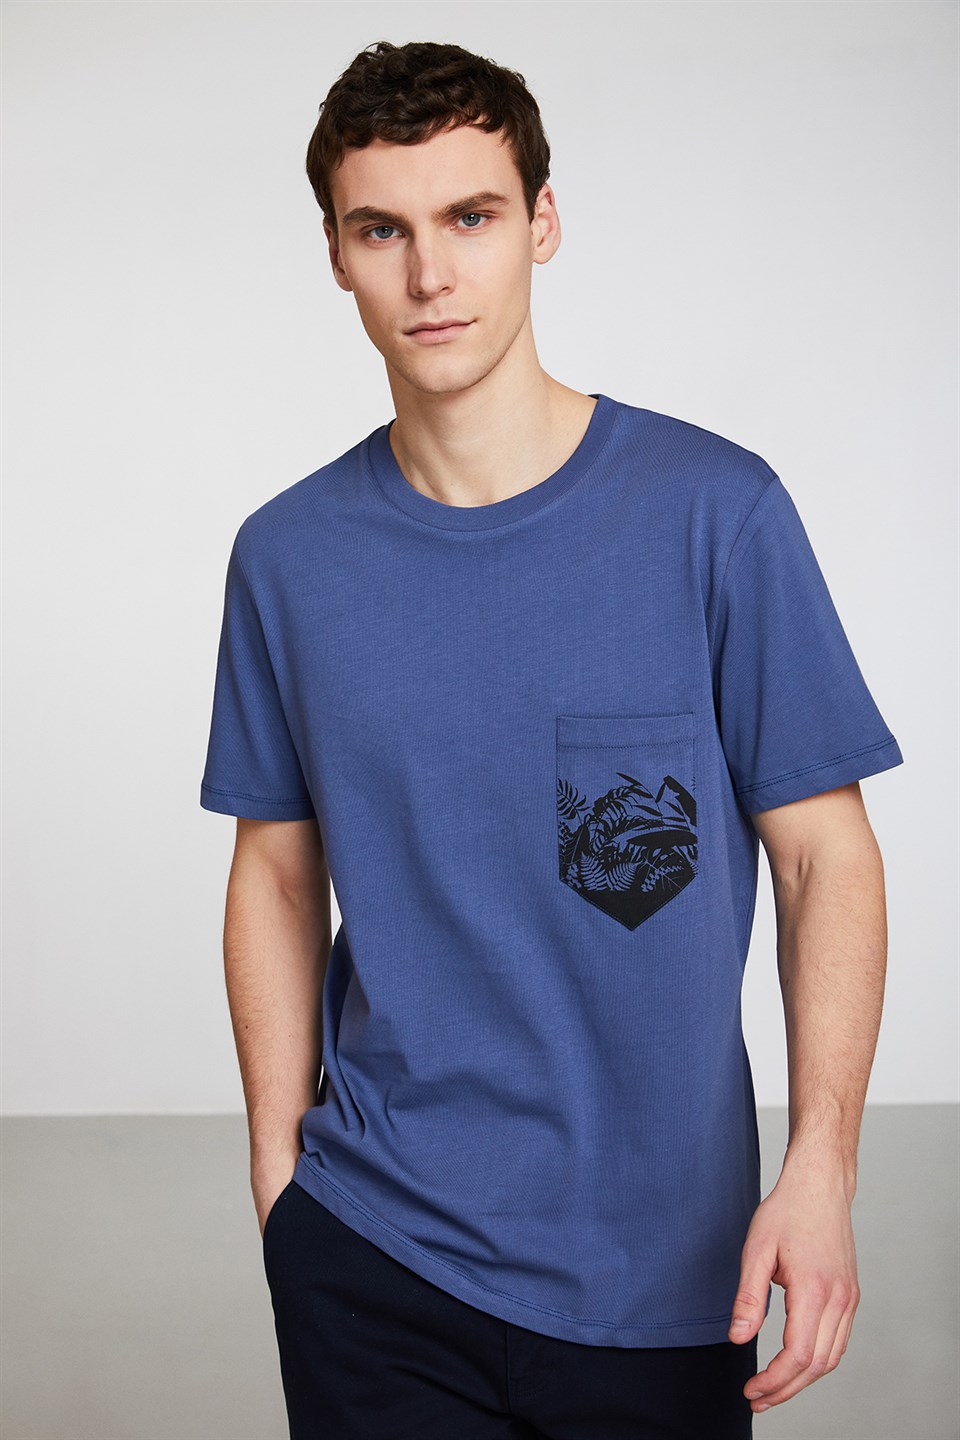 ASHER Erkek İndigo Mavi Baskılı Yuvarlak Yaka Comfort Fit T-Shirt